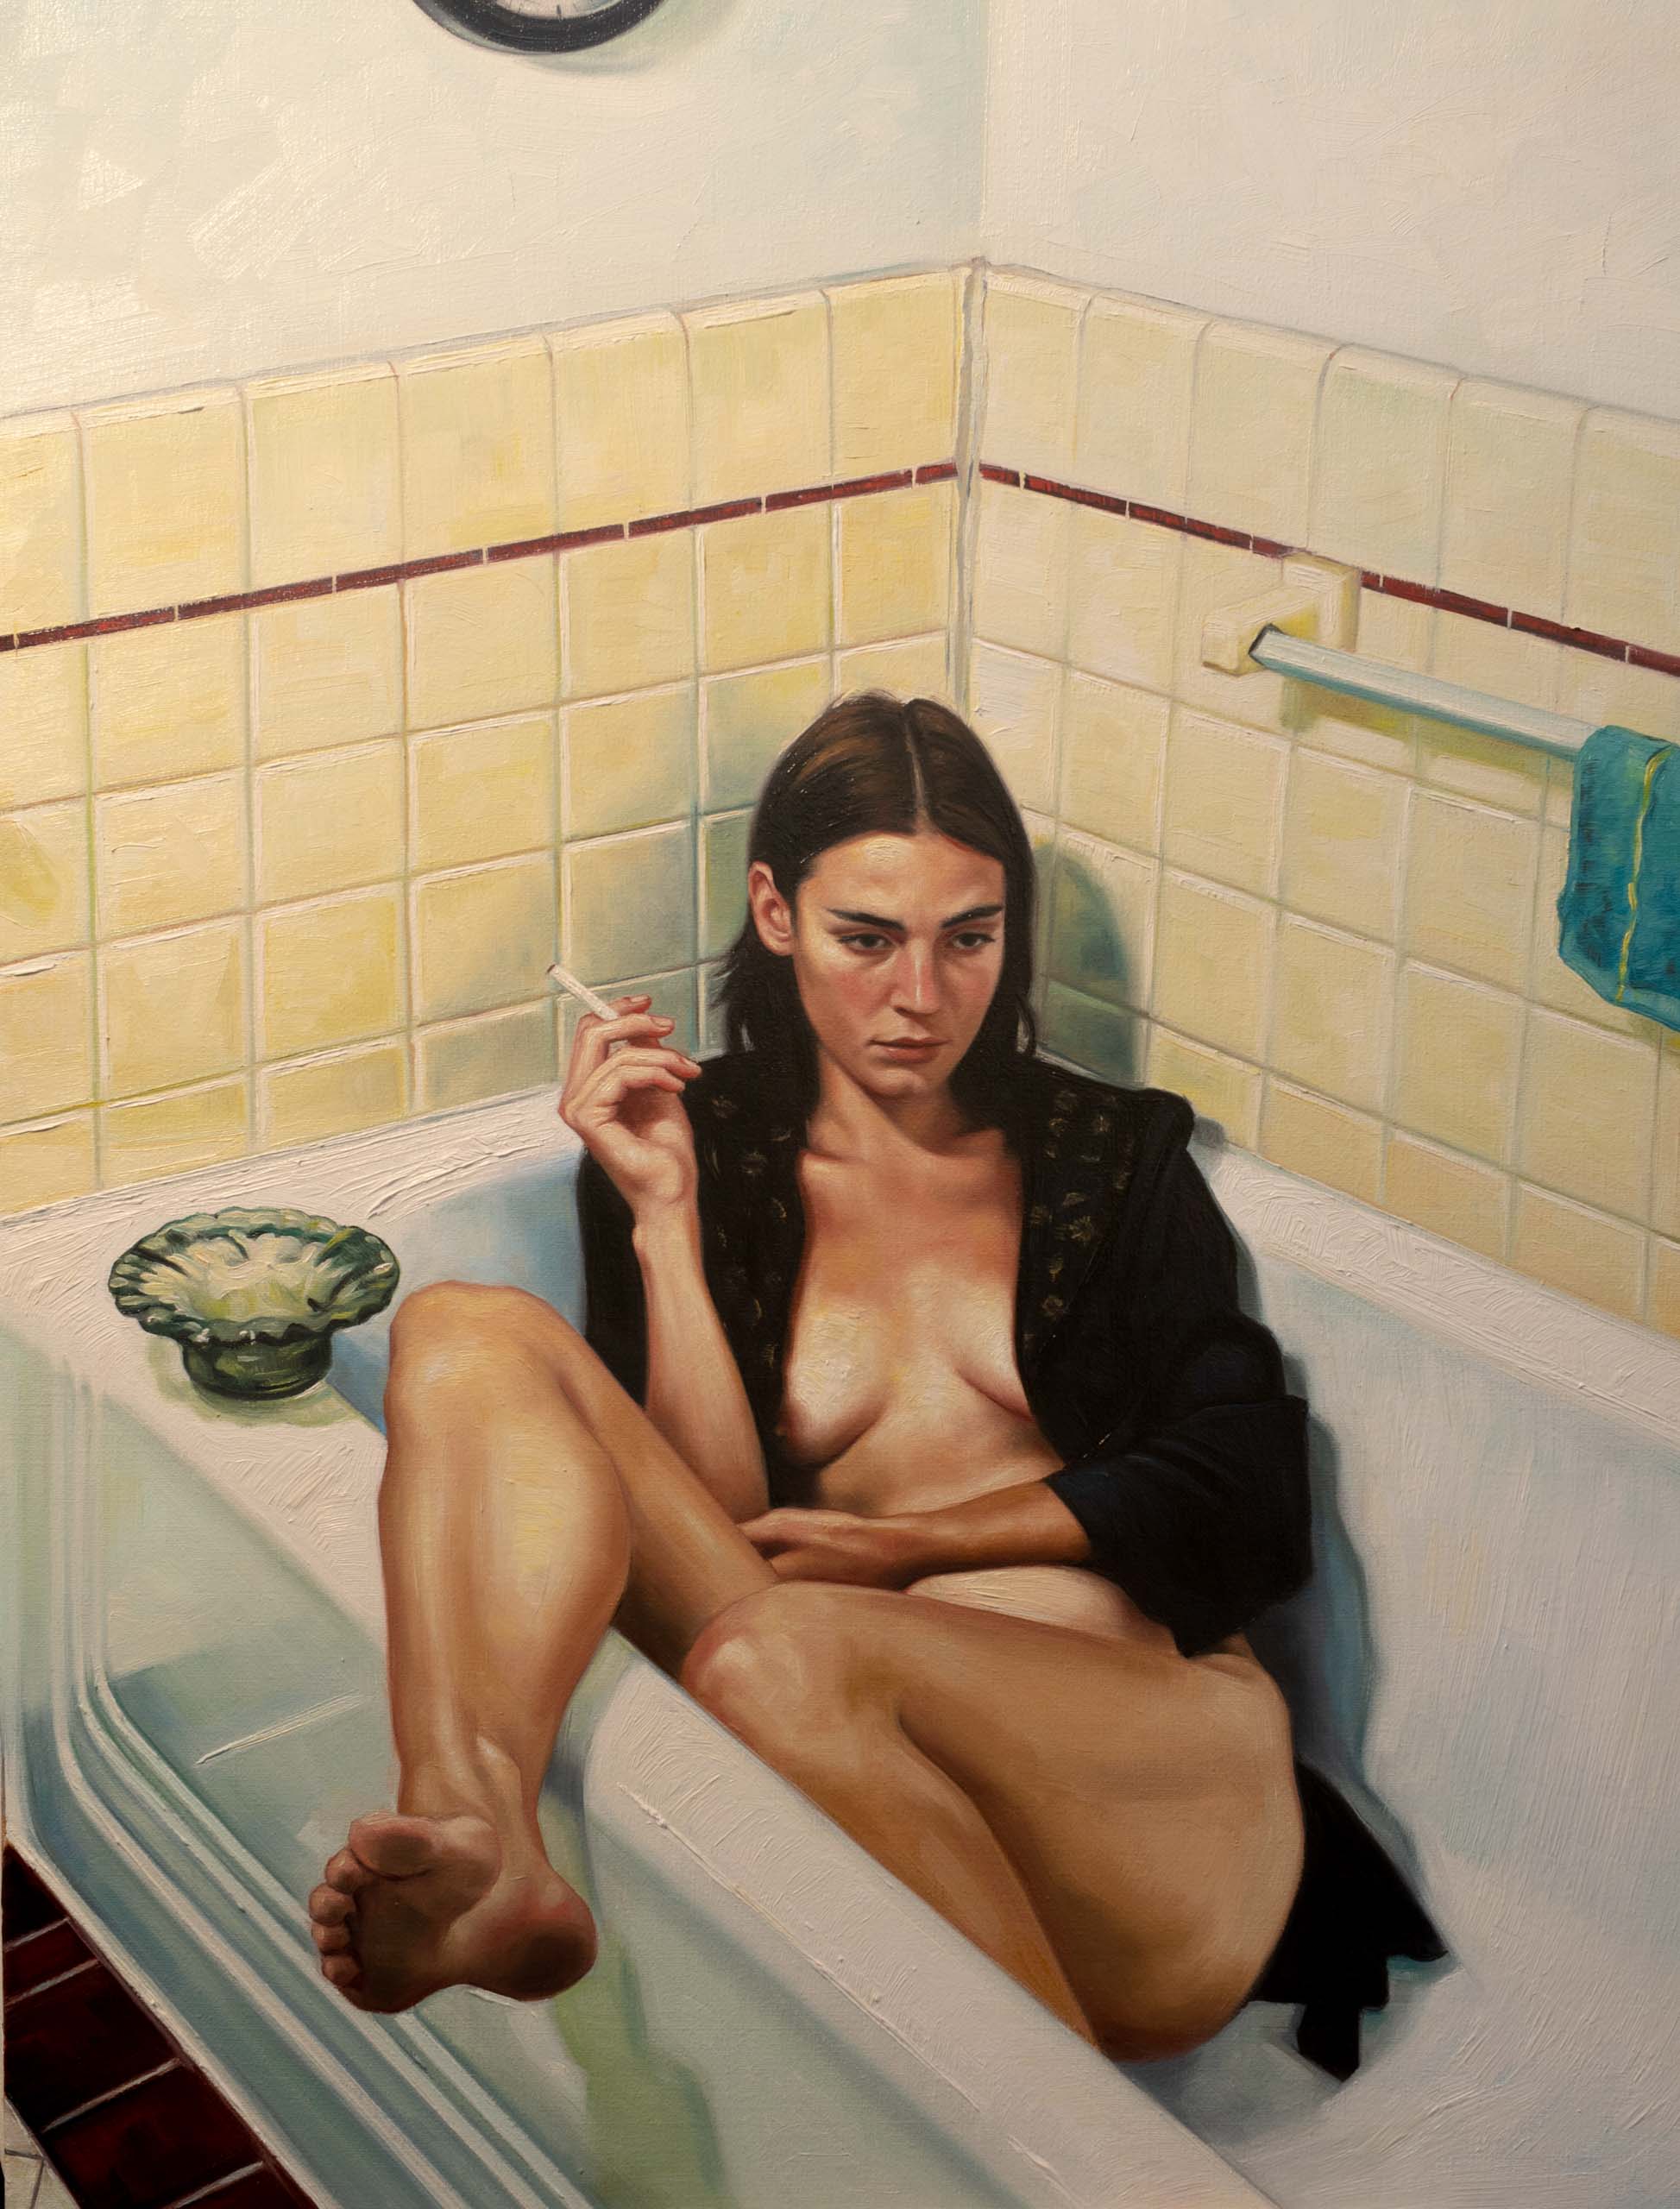 David Alvarado, "Cigarettes and Frustration", Oil on linen, 22 x 28 in. 2020